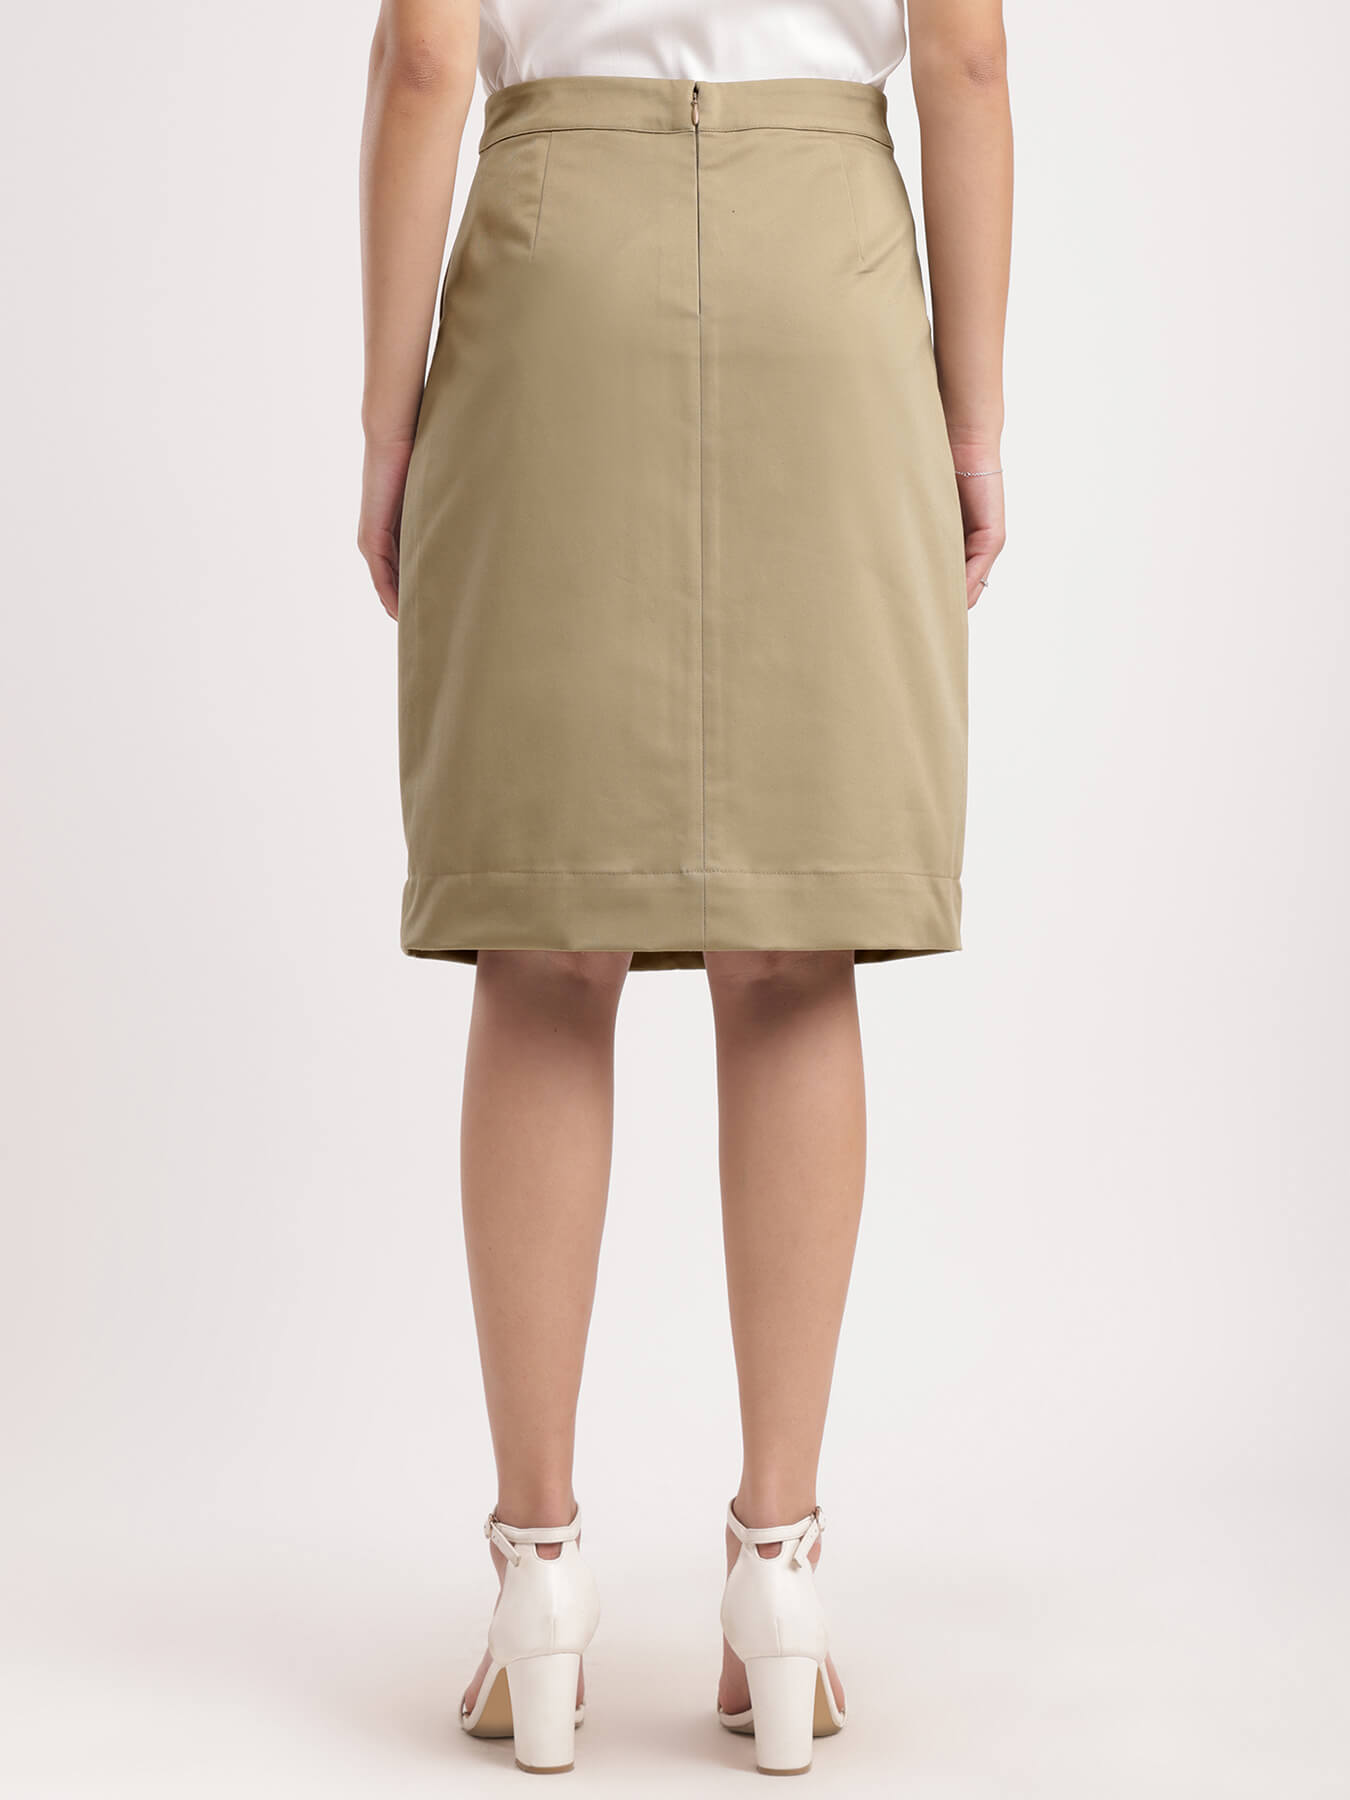 Stretchable A-line Skirt - Beige